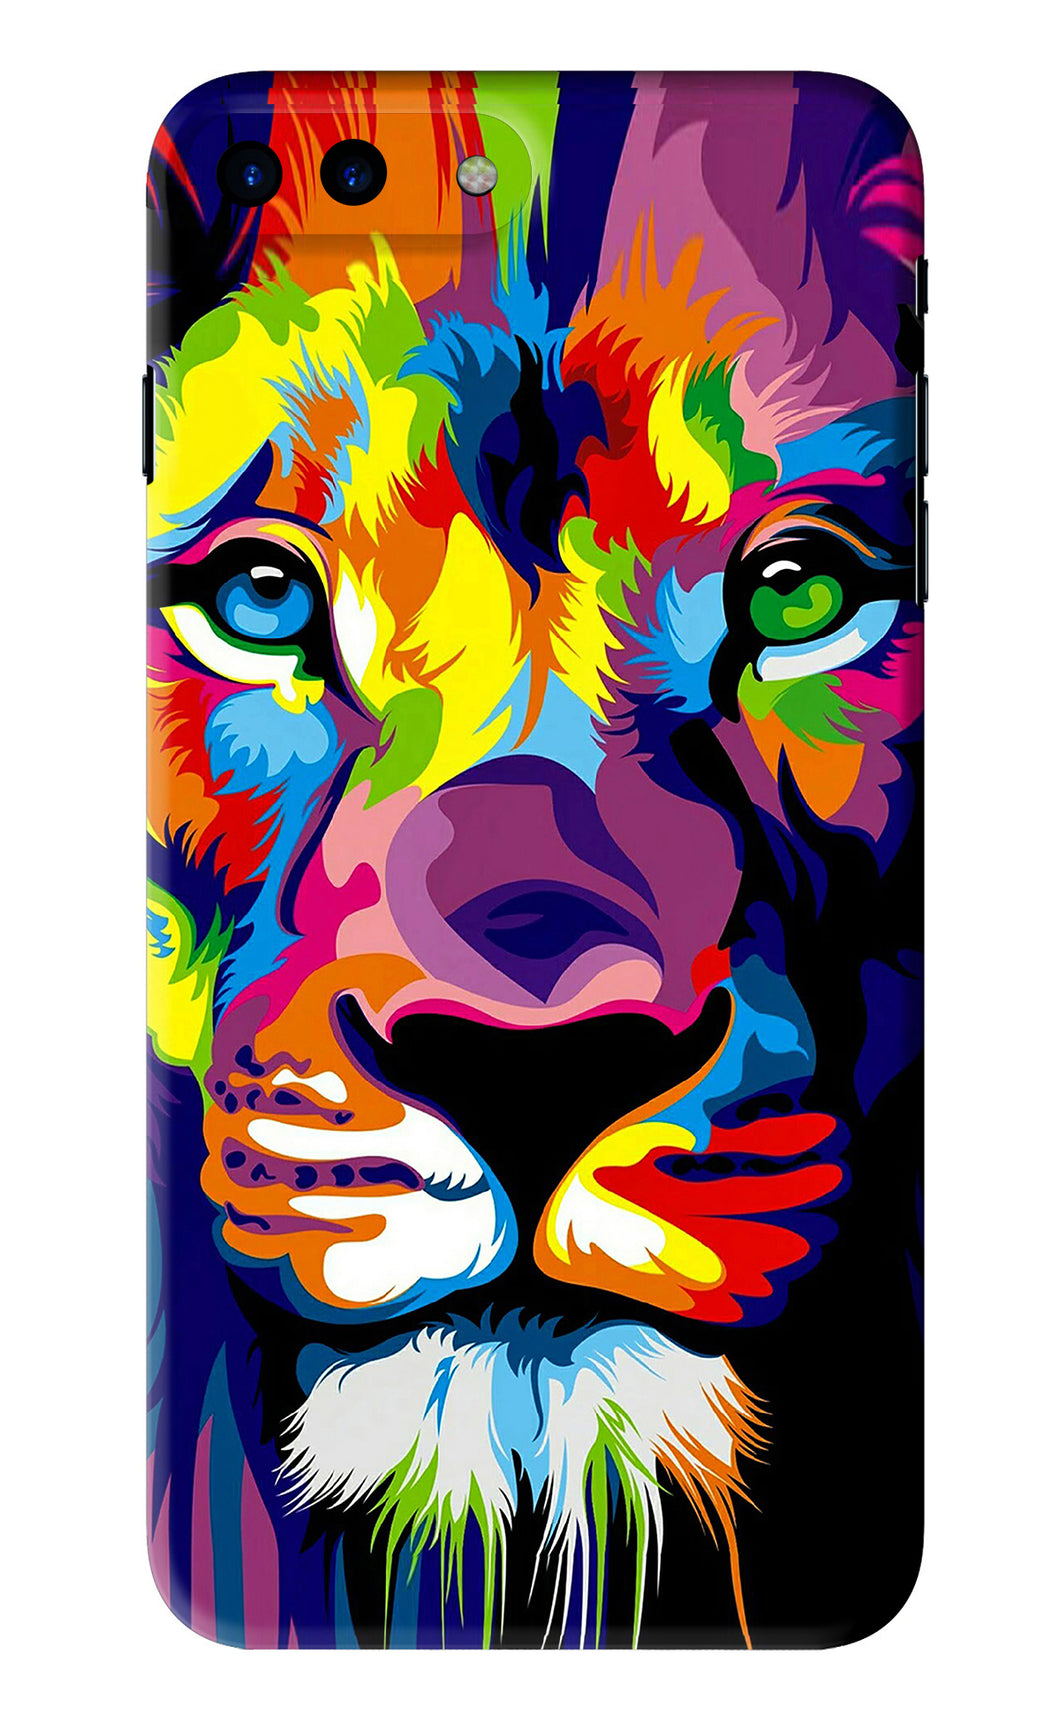 Lion iPhone 7 Plus Back Skin Wrap